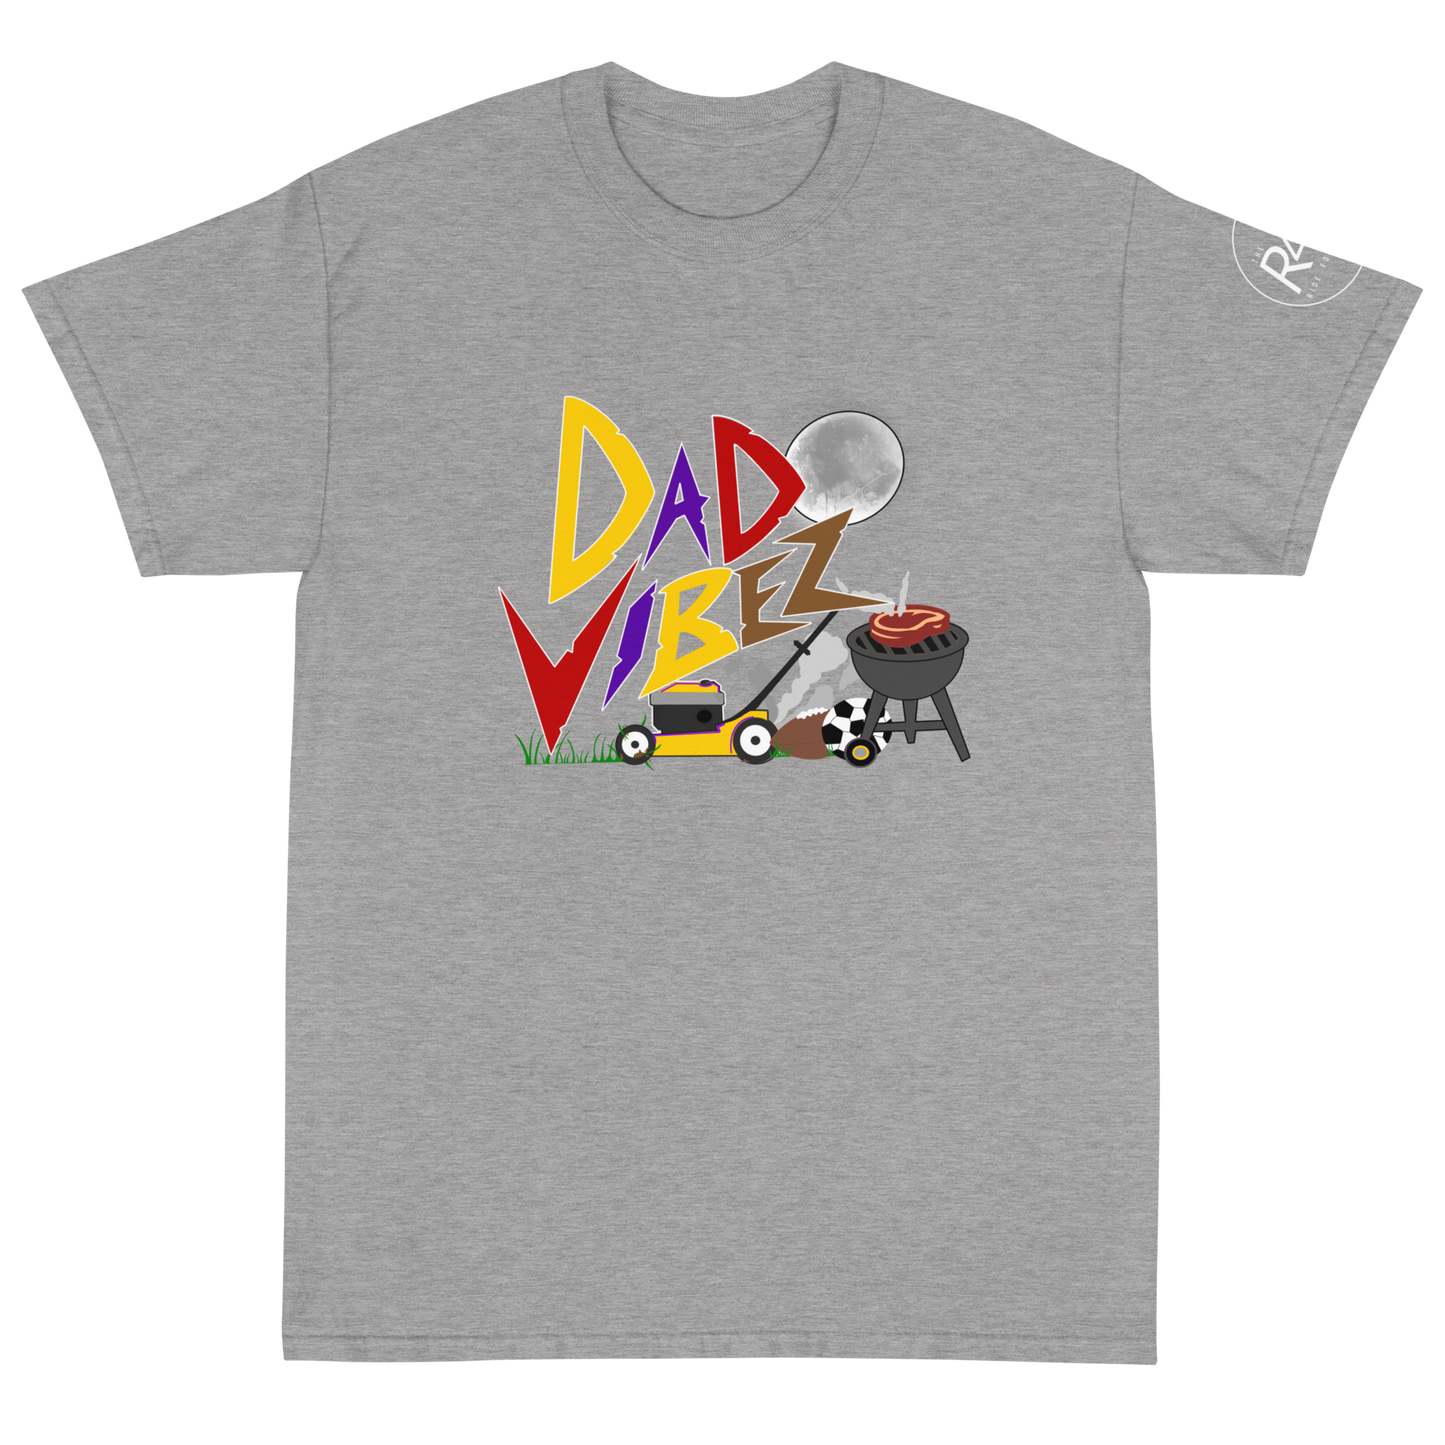 DAD VIBEZ - Short Sleeve T-Shirt